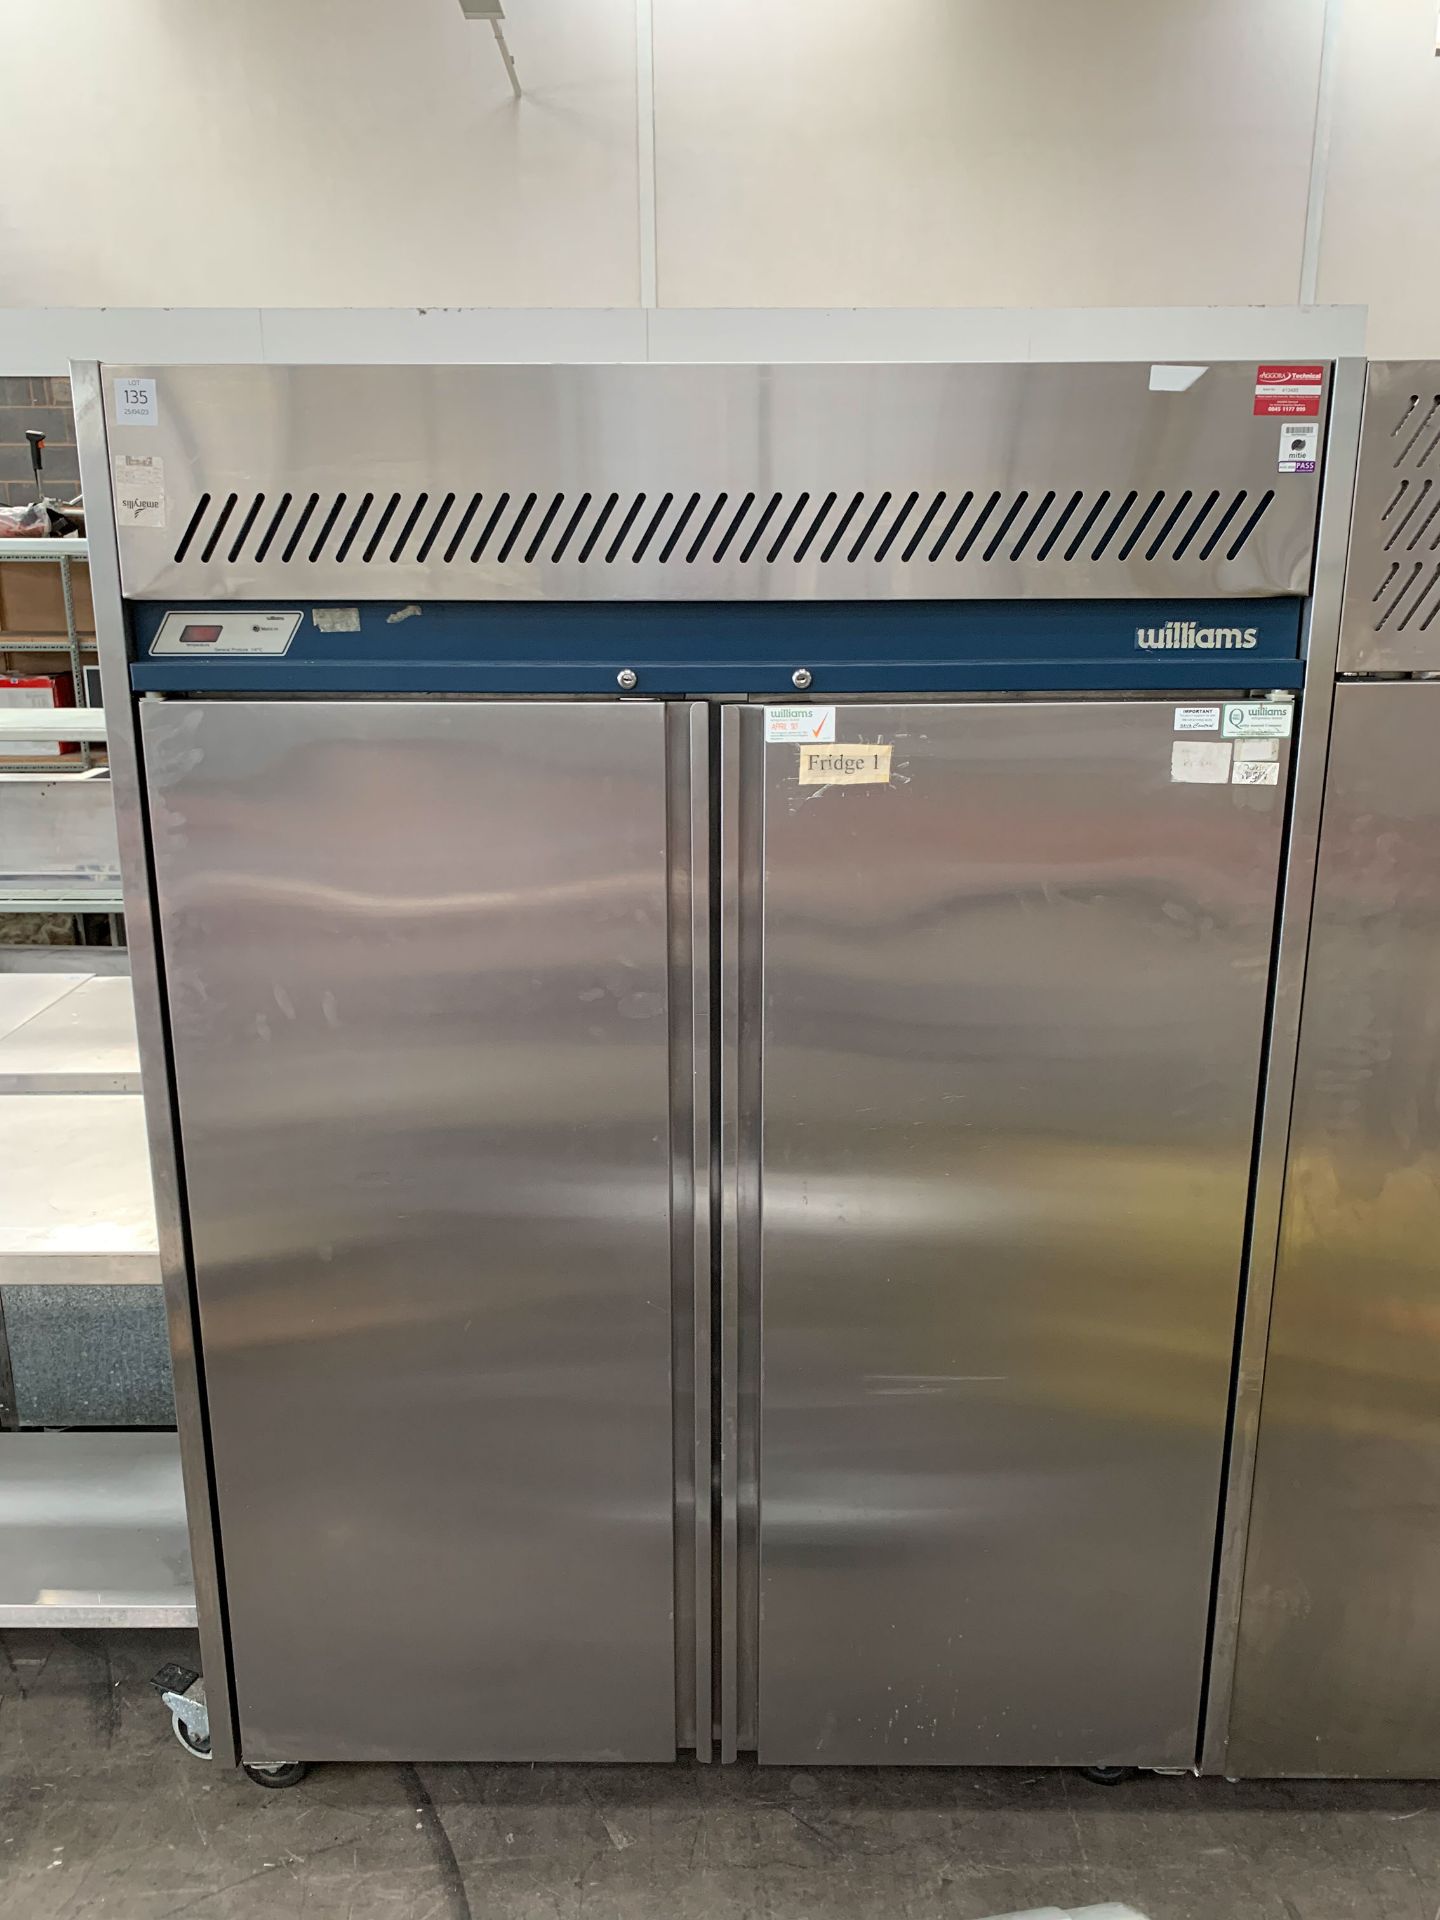 Williams 'HG2T Garnet' Commercial 2-door Refrigerator - Image 2 of 5